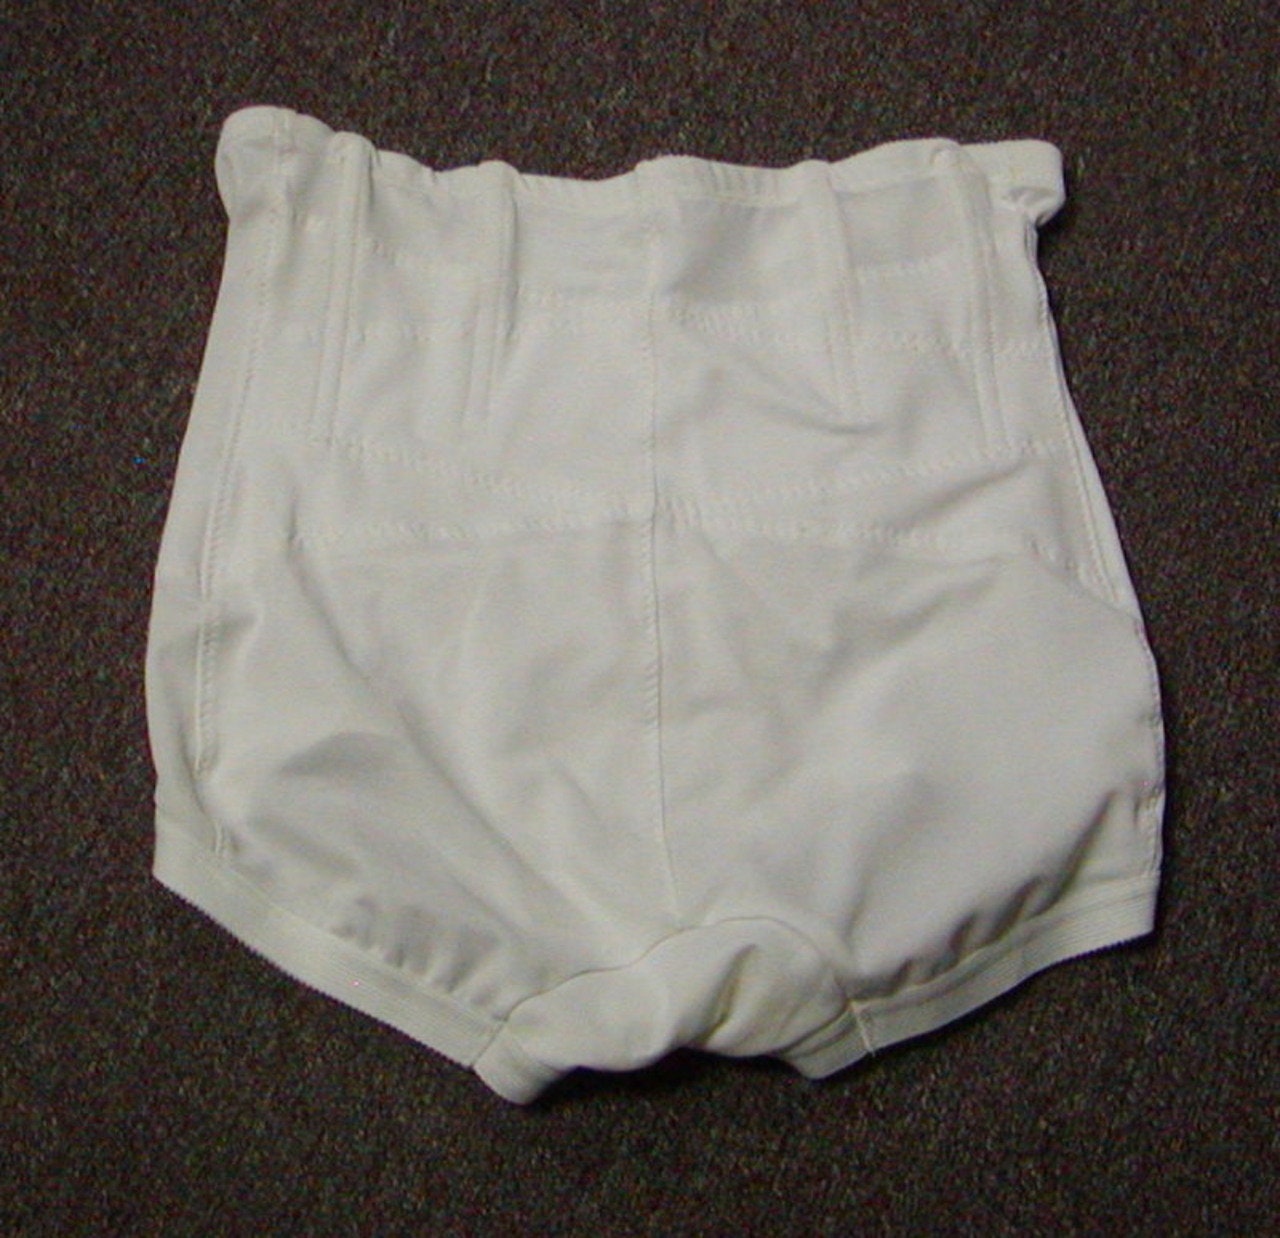 Viintage New J. C. Penney's Underscore Firm Control Boy Leg Panty Girdle  Brief White X Large 3132 -  Sweden